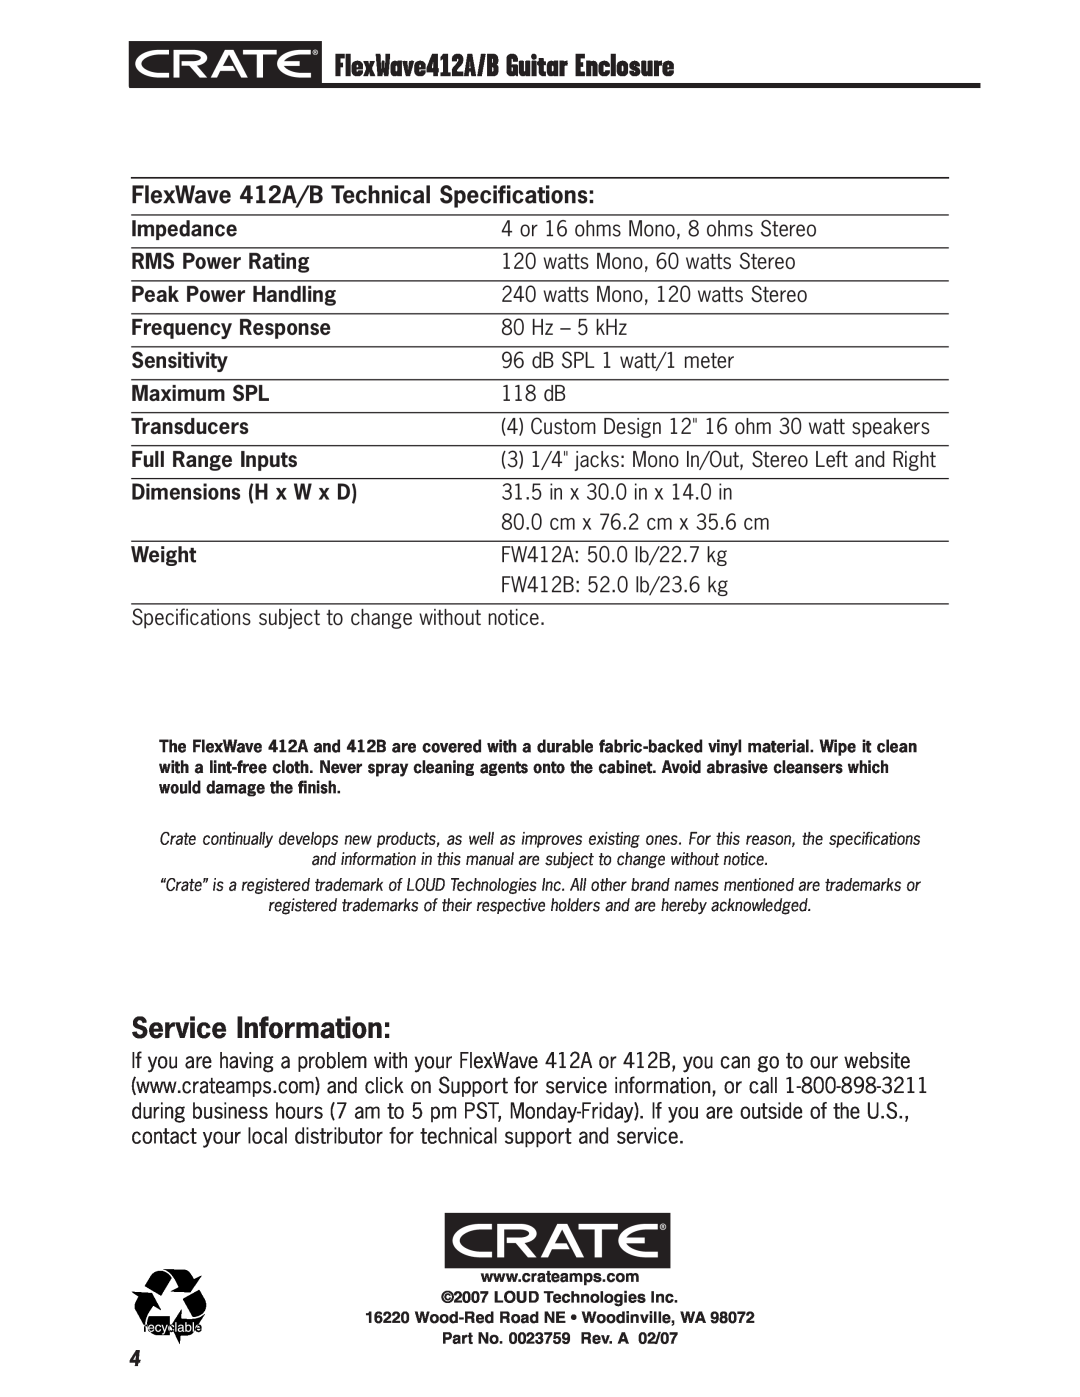 Crate Amplifiers 412B Service Information, FlexWave412A/B Guitar Enclosure, FlexWave 412A/B Technical Specifications 